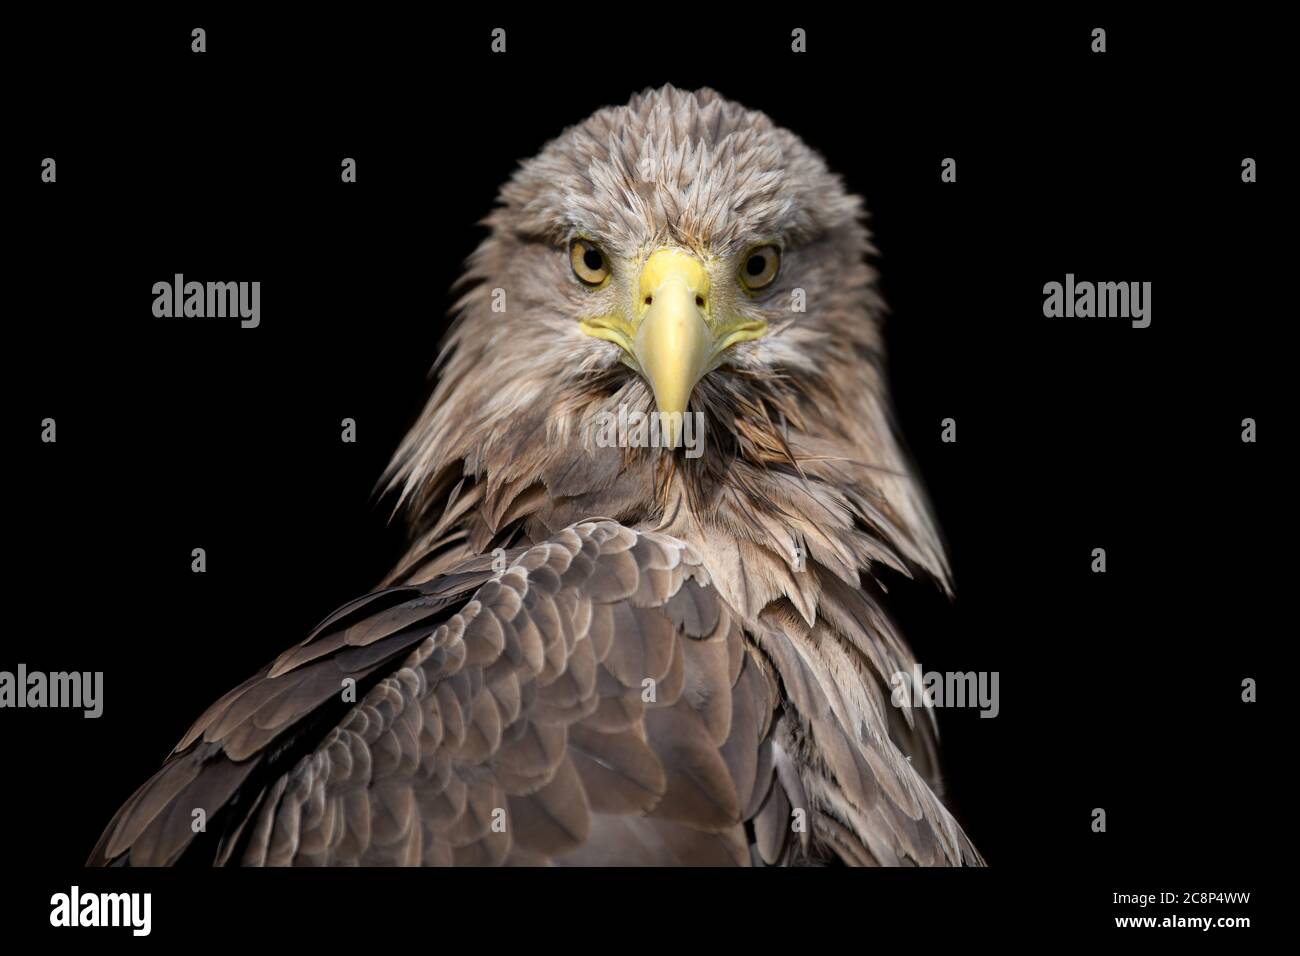 Close up White-tailed eagle portrait on black background Stock Photo